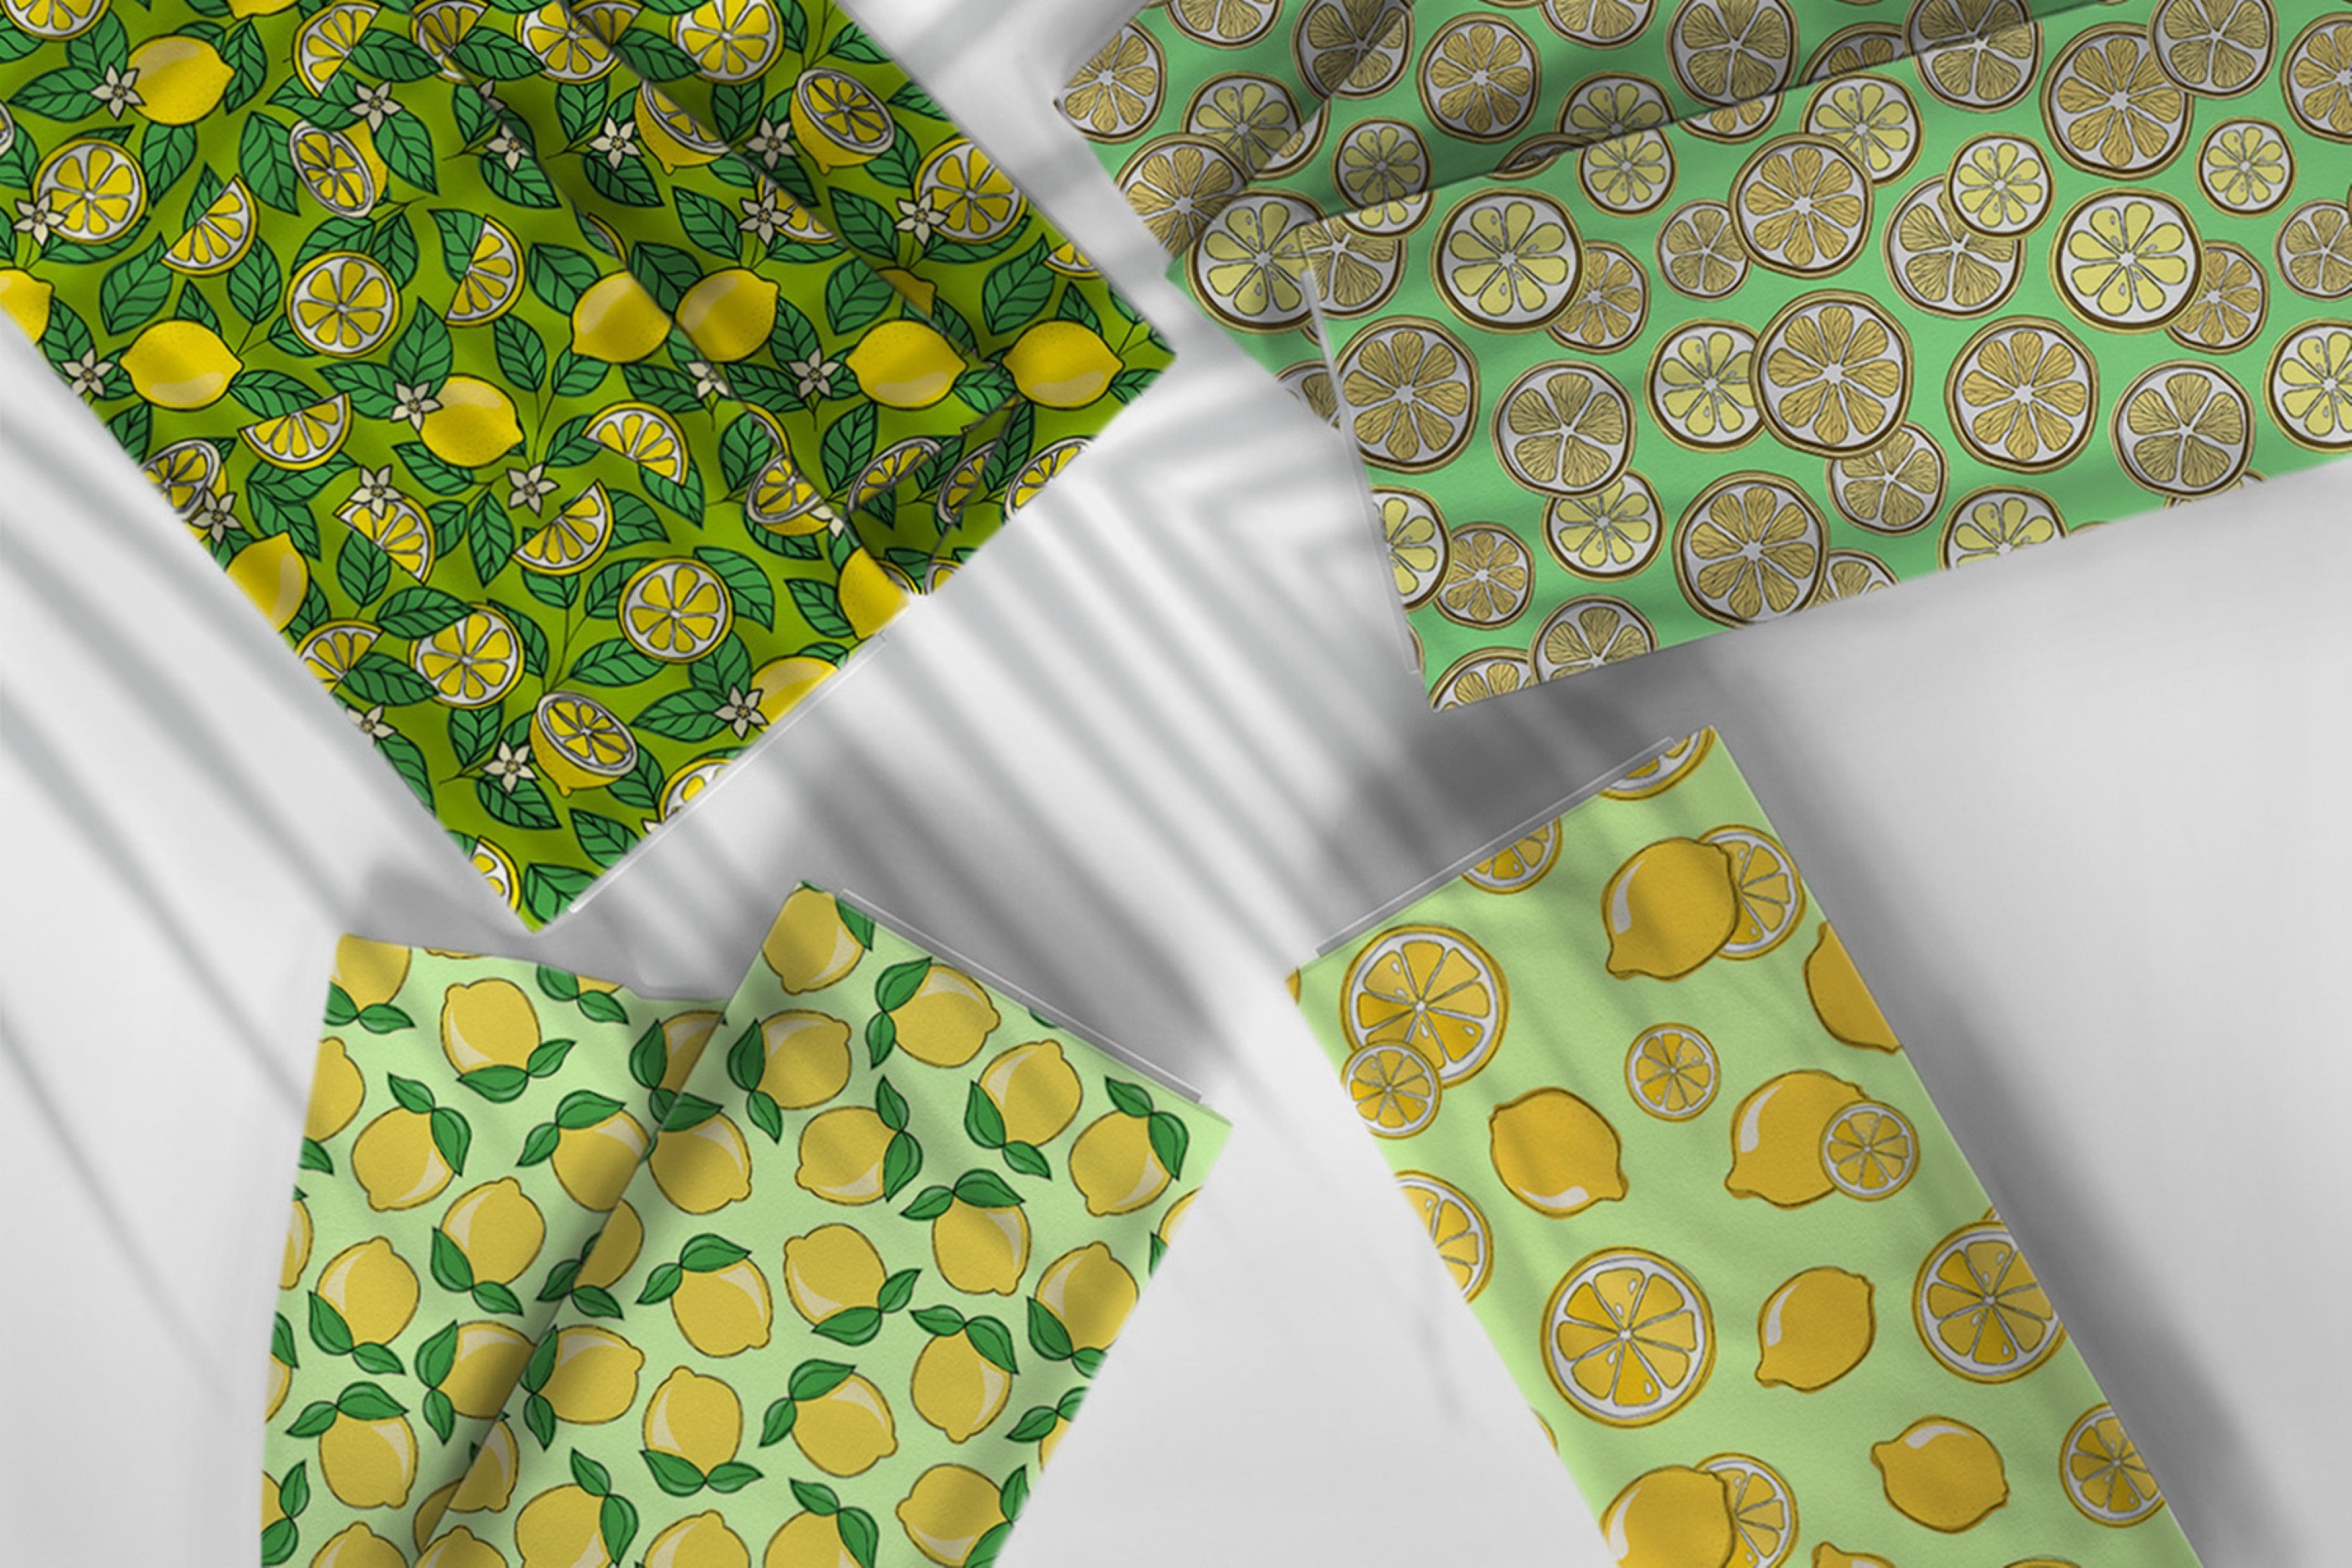 Green textures with lemon prints.